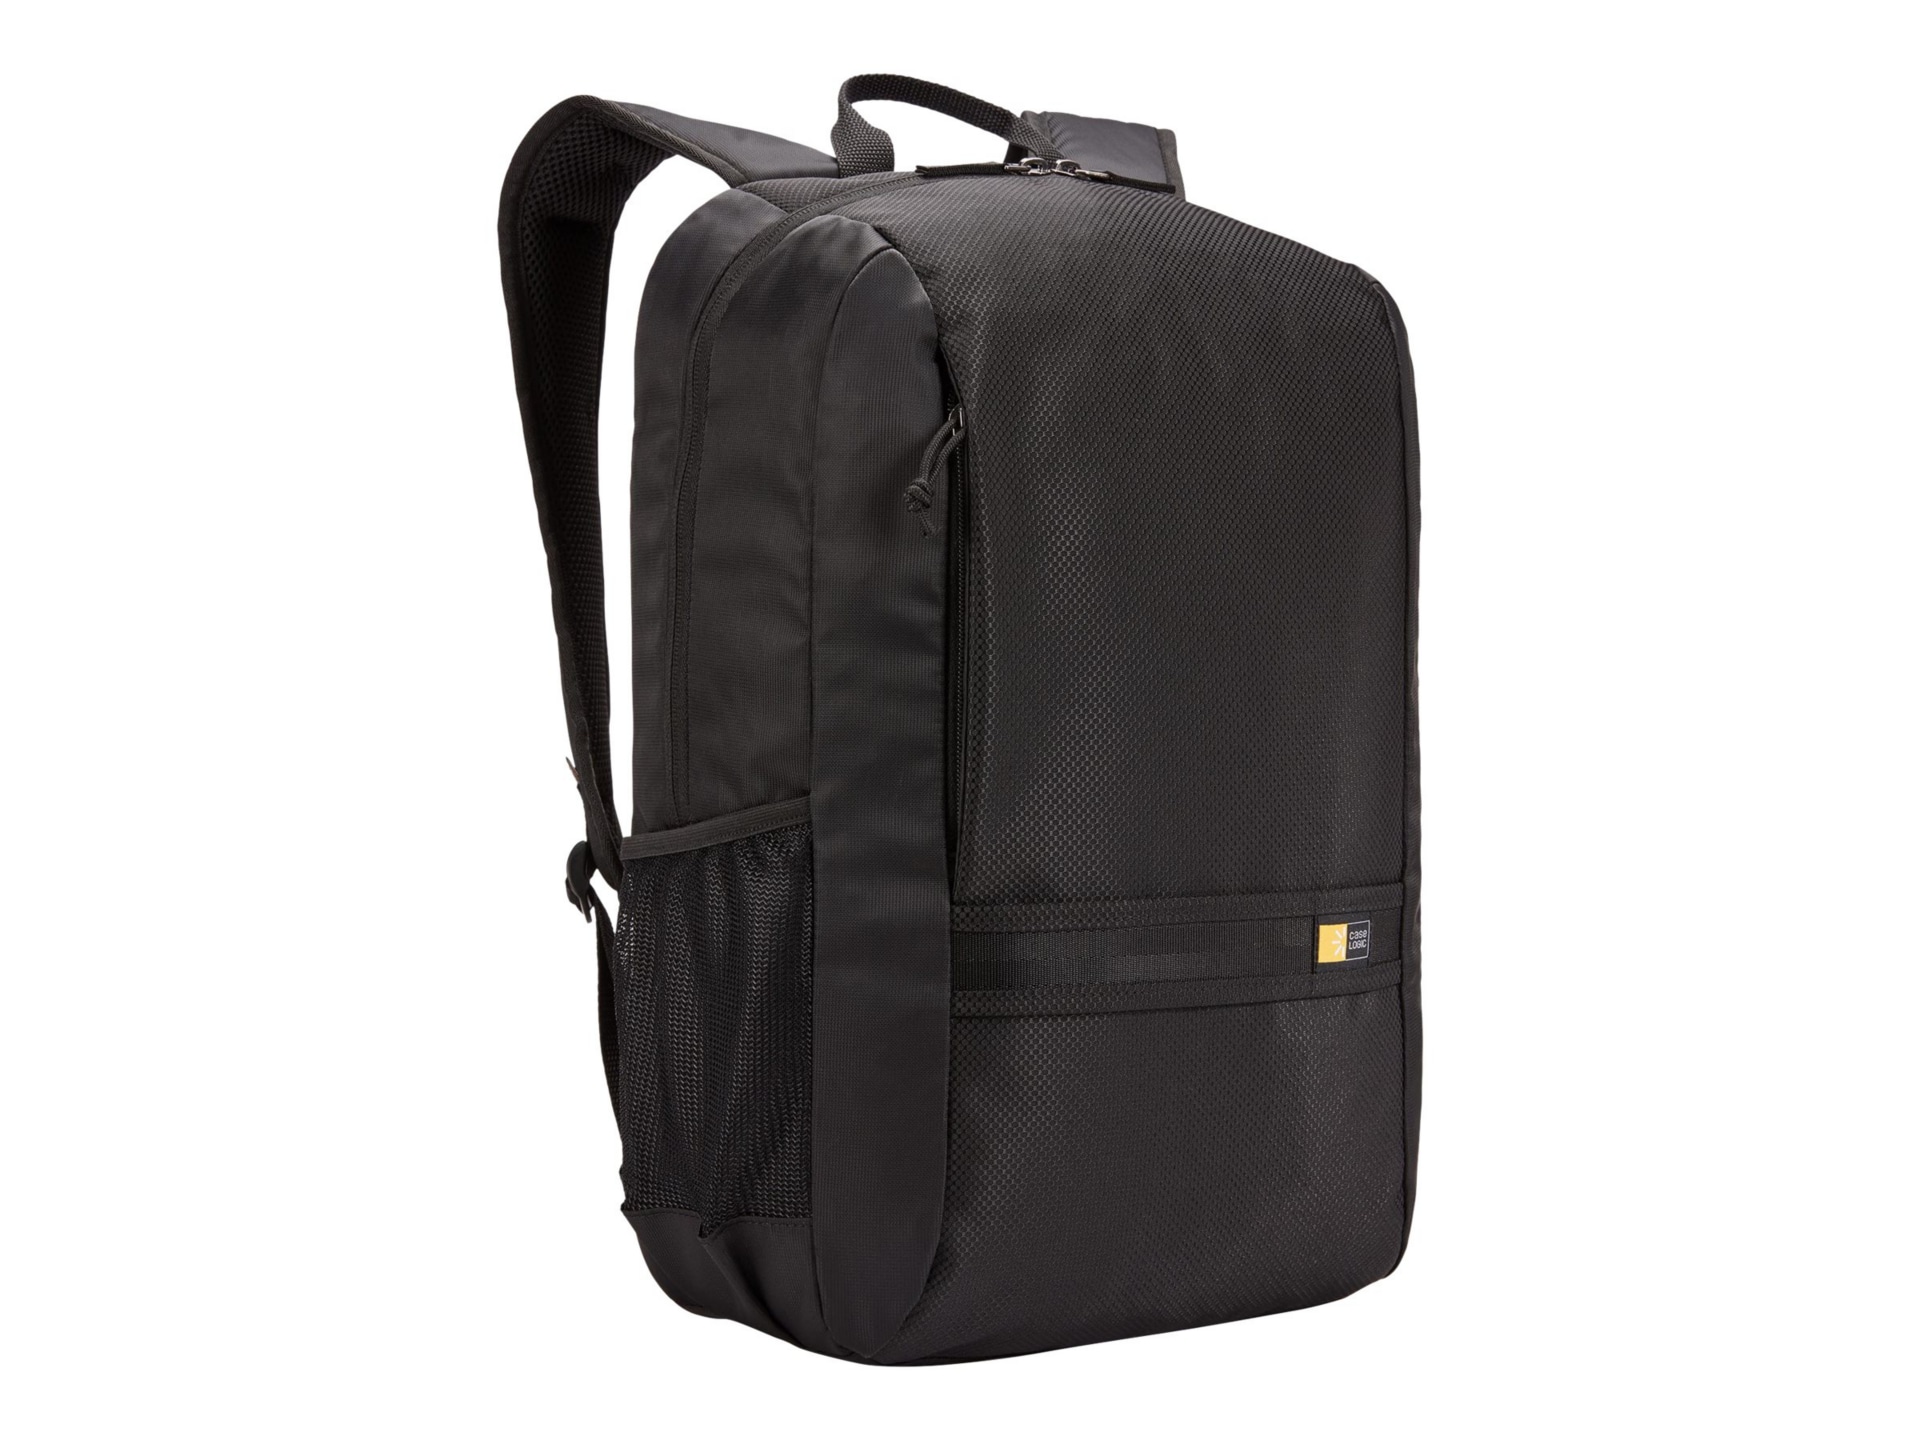 Case Logic Key KEYBP-1116 - notebook carrying backpack